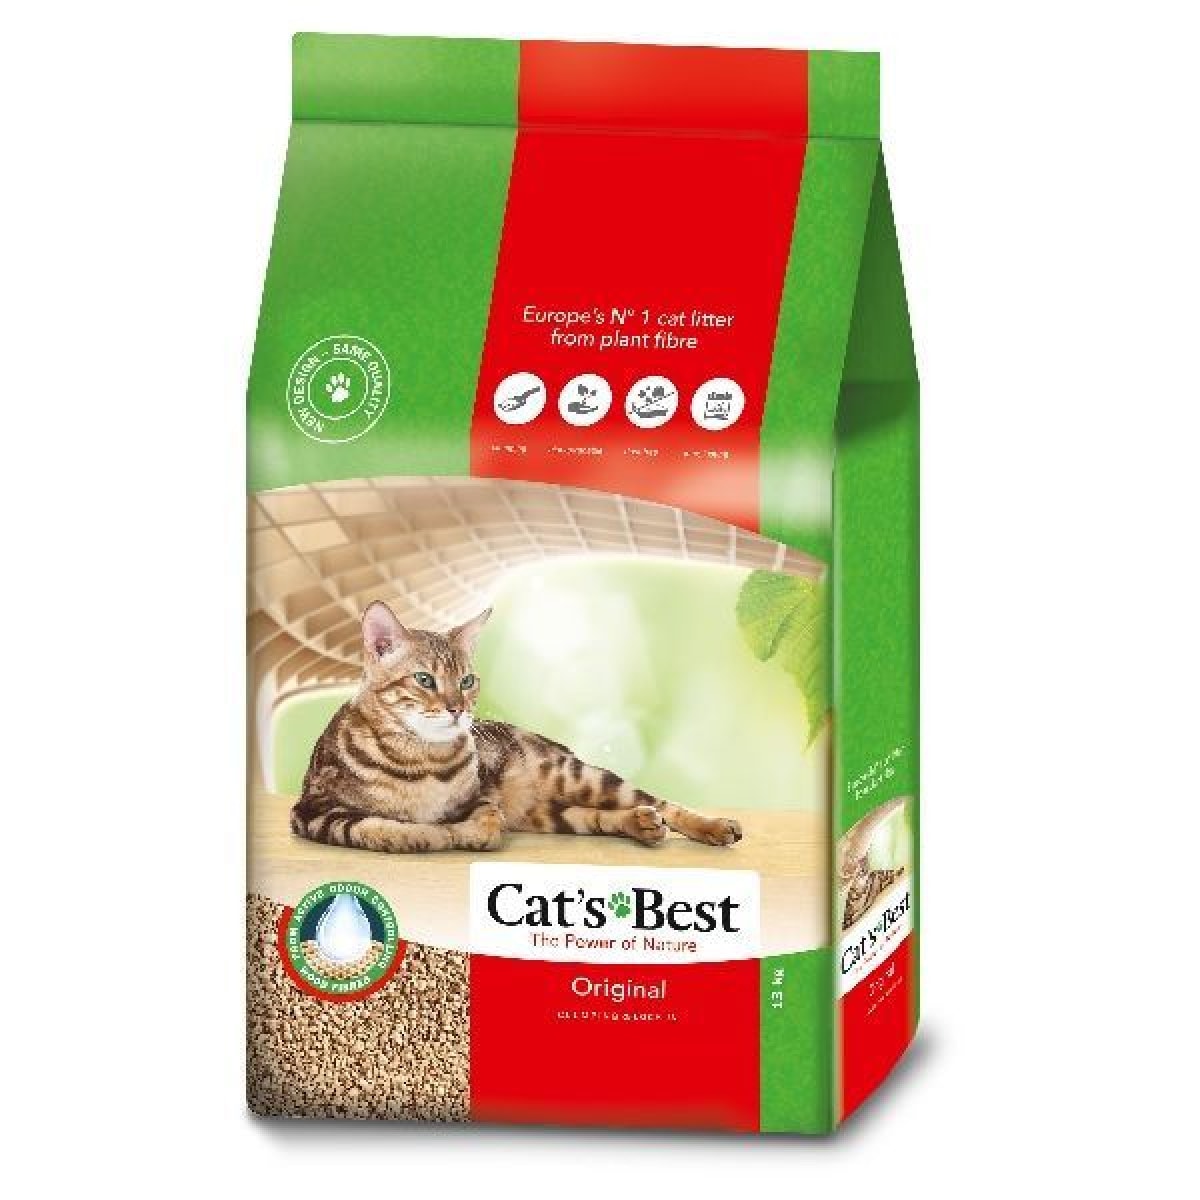 Cats Best Original Clumping Cat Litter 13kg – Pawfect Supplies Ltd Product Image